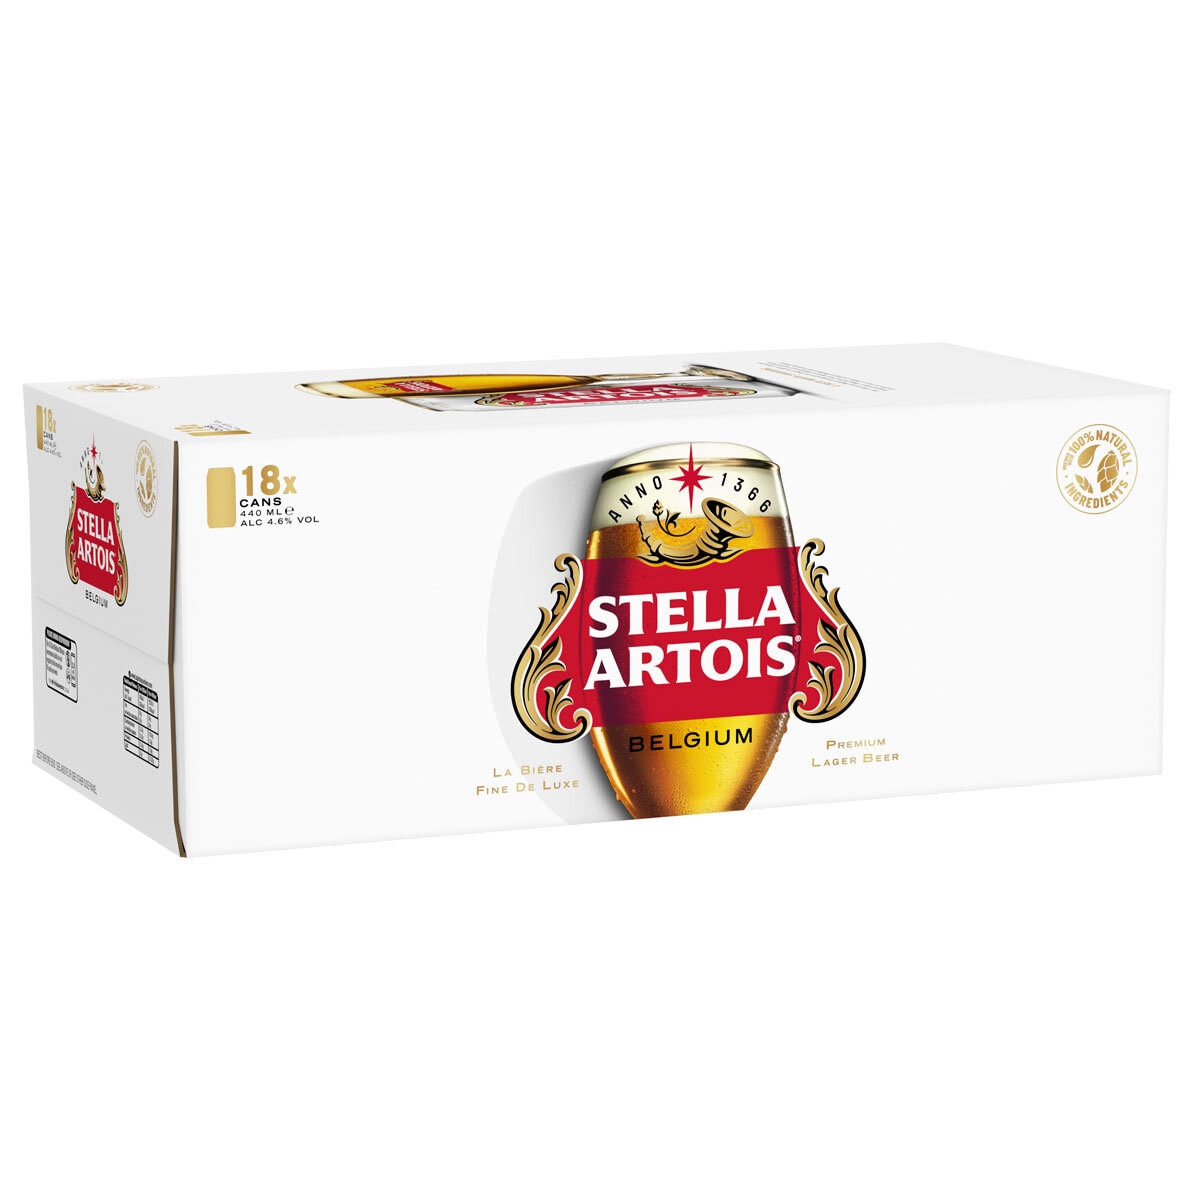 Stella Artois 18 x 440ml